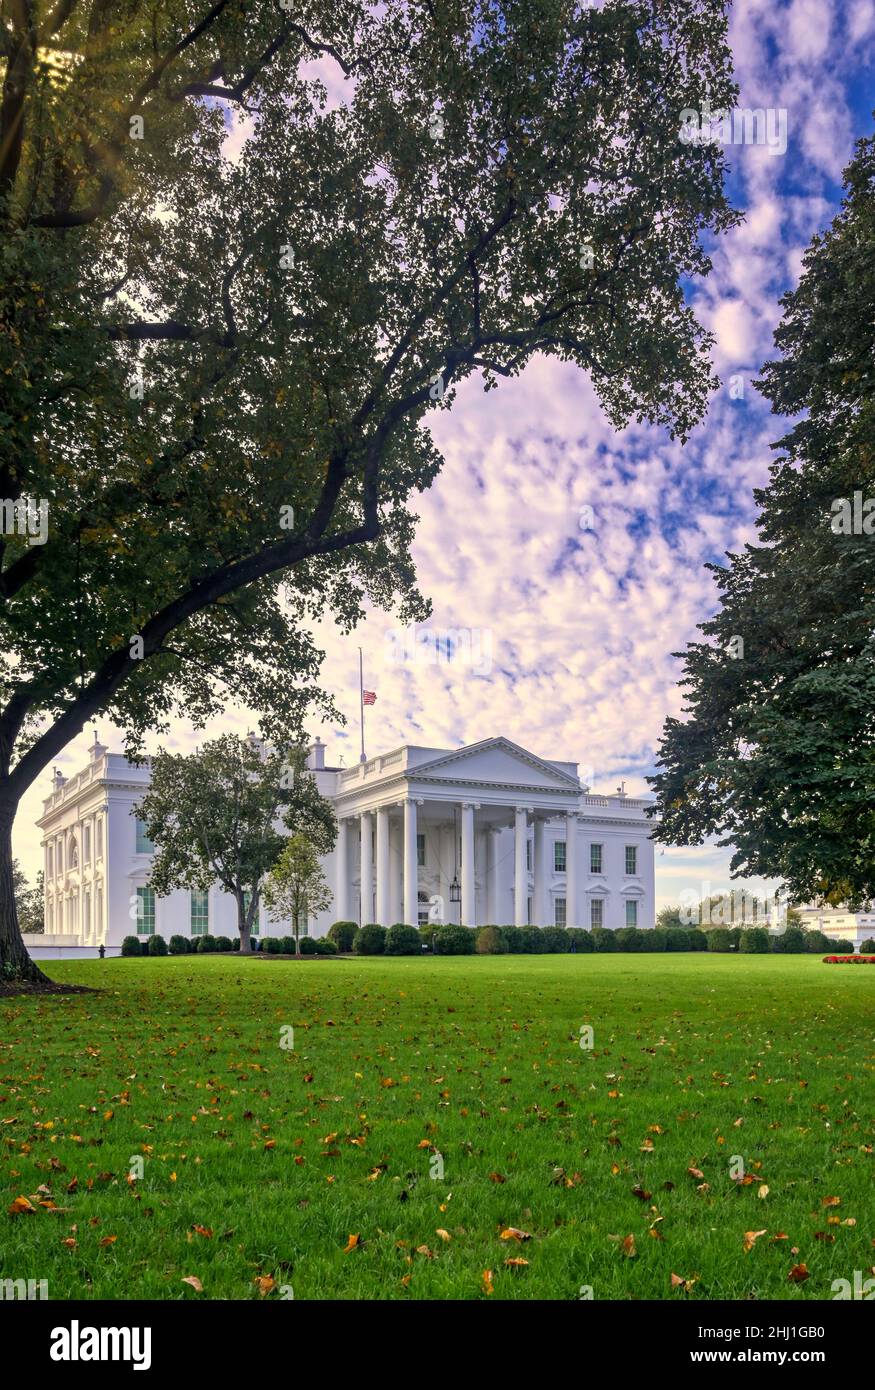 The White House located at 1600 Pennsylvania Avenue in Washington, D.C. Stock Photo